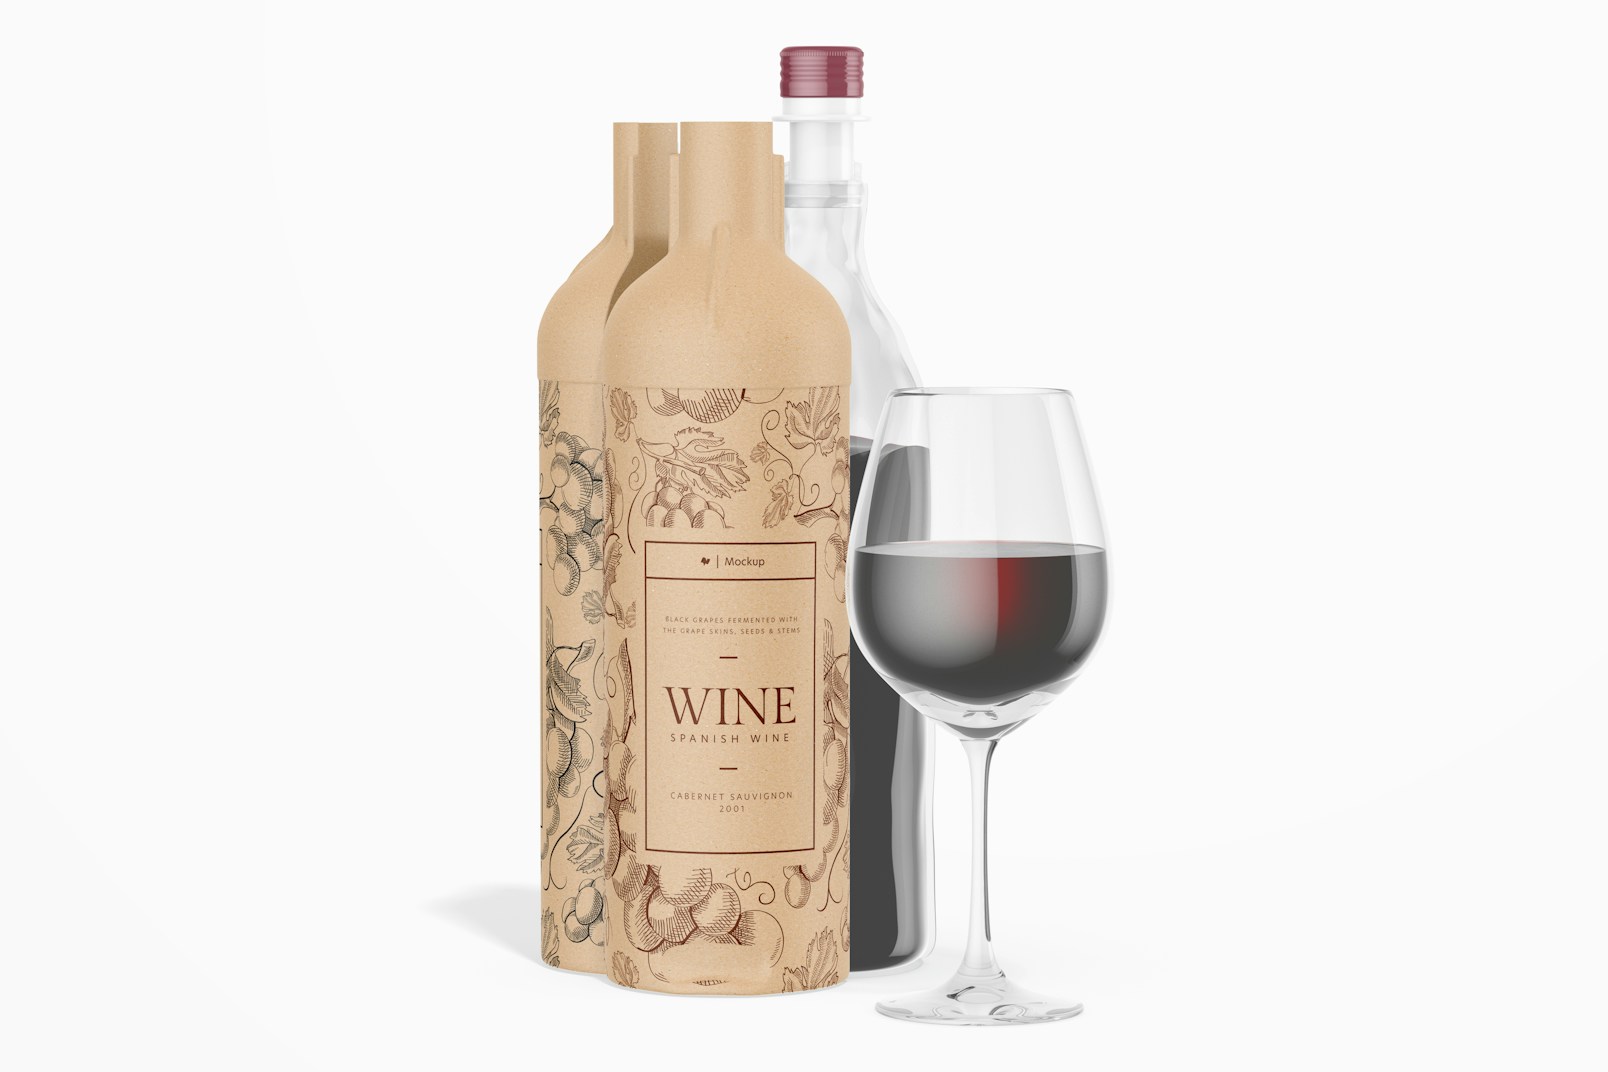 Maqueta de Botella de Vino en Carton, con Copa